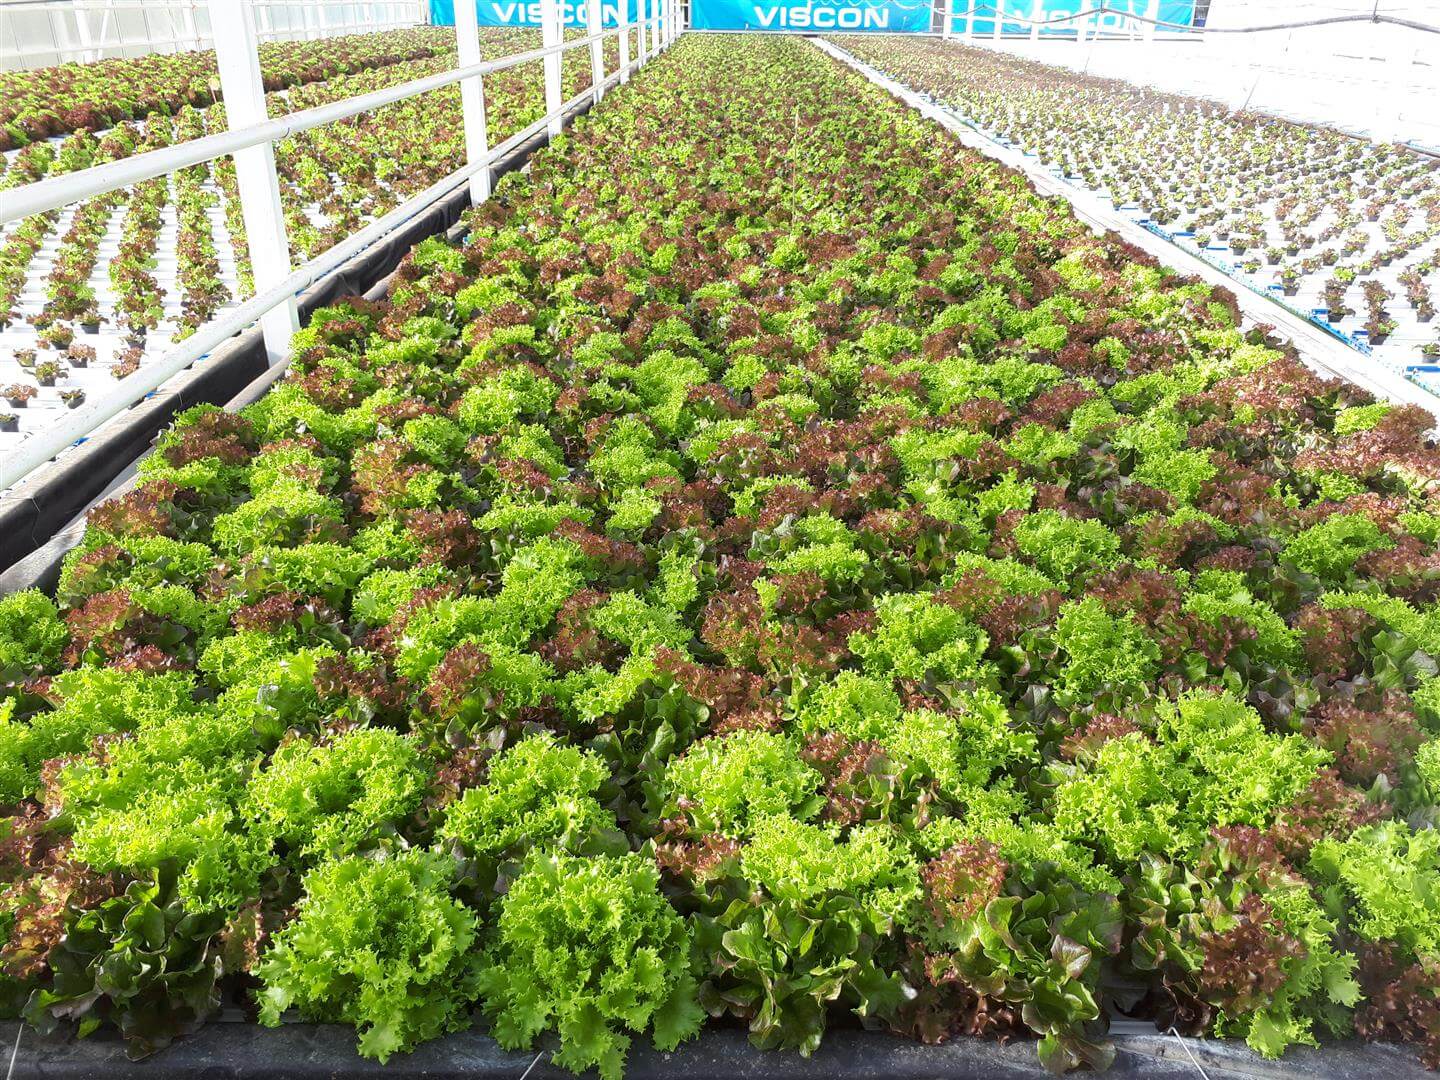 Lettuce NPK hydroponics 